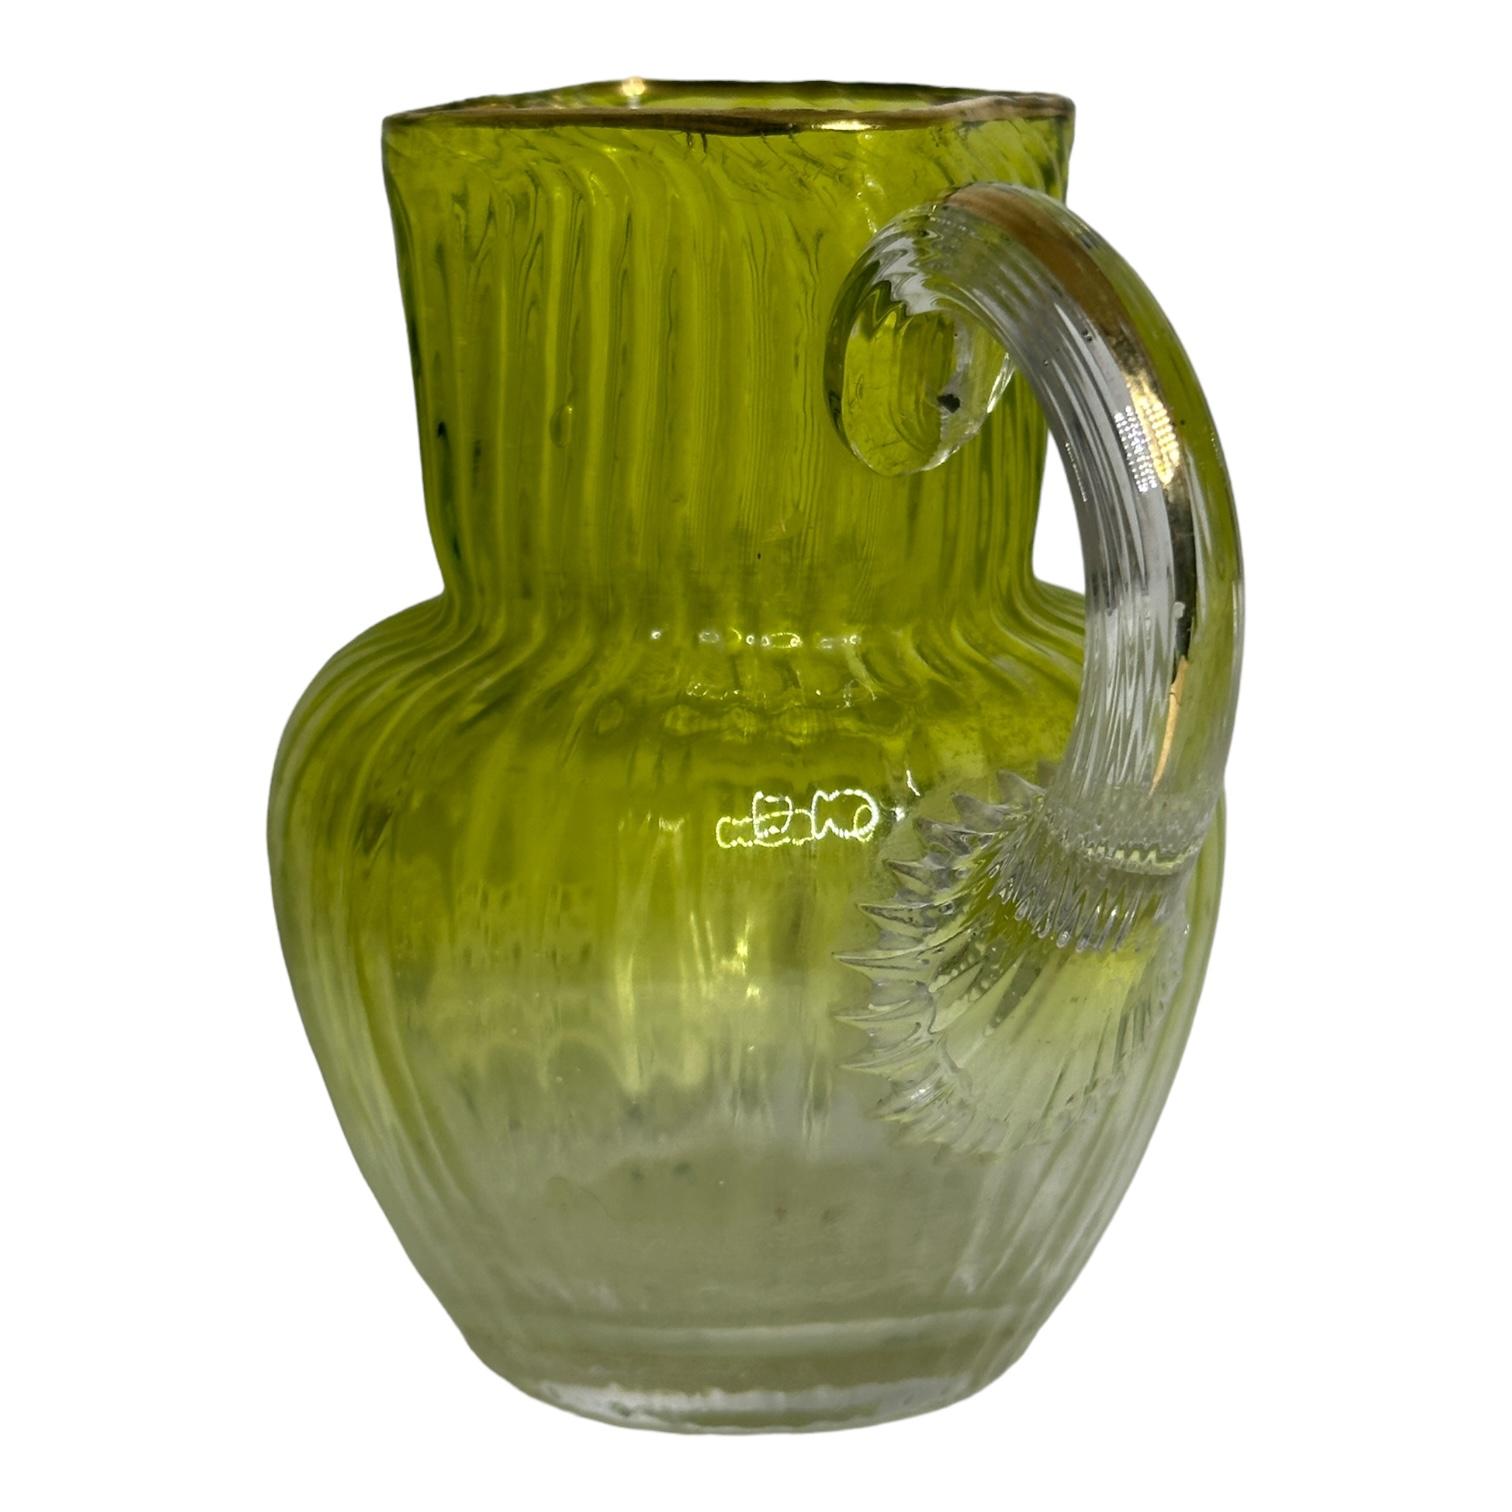 Early 20th Century Art Nouveau Souvenir Glass Creamer or Small Vase Antique, German Glassware For Sale